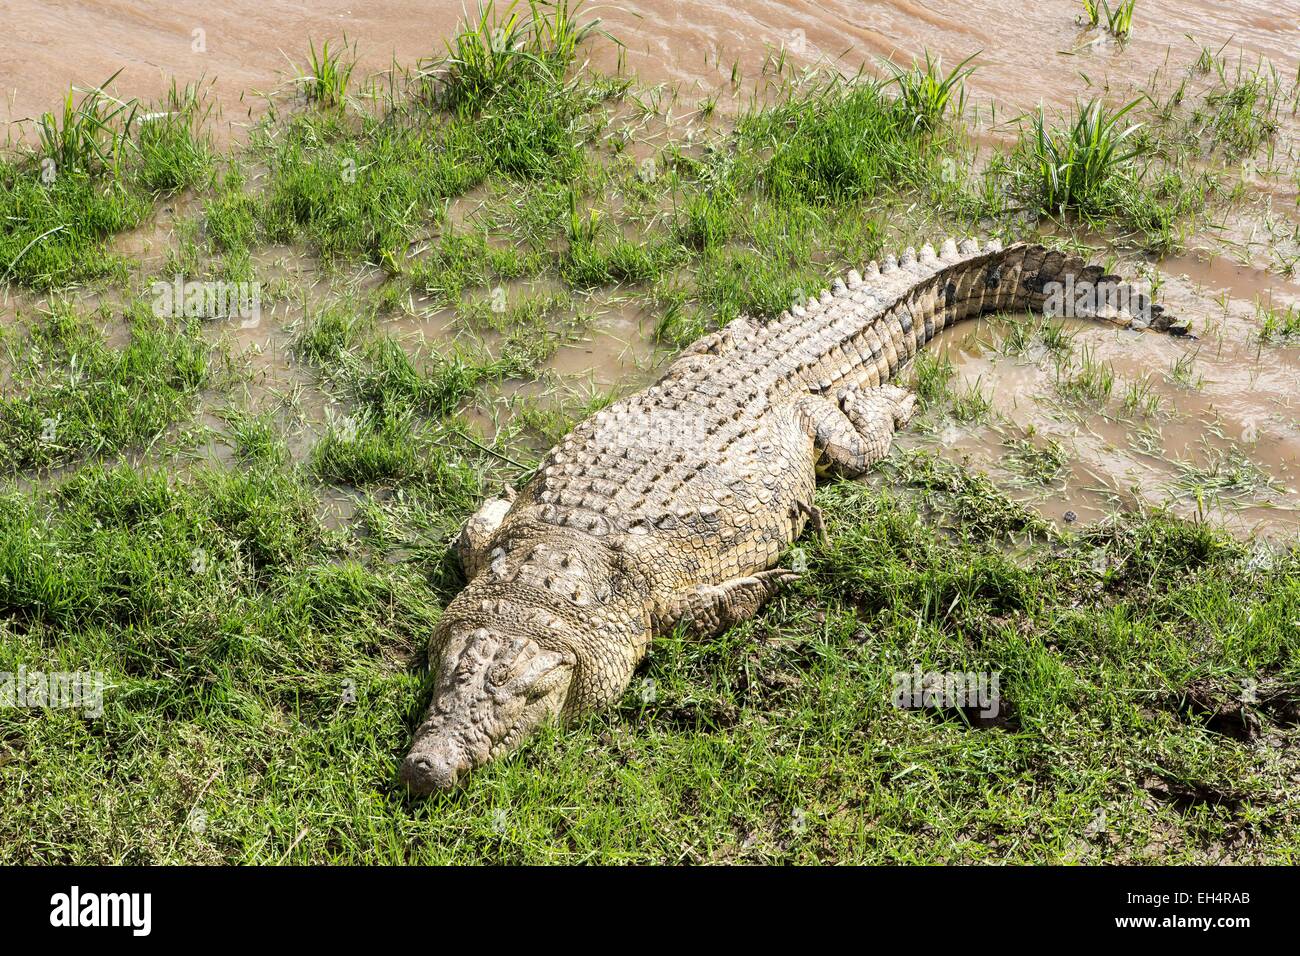 Kenya, Masai Mara, le crocodile du Nil (Crocodylus niloticus), reposant sur la rive de la rivière Mara Banque D'Images